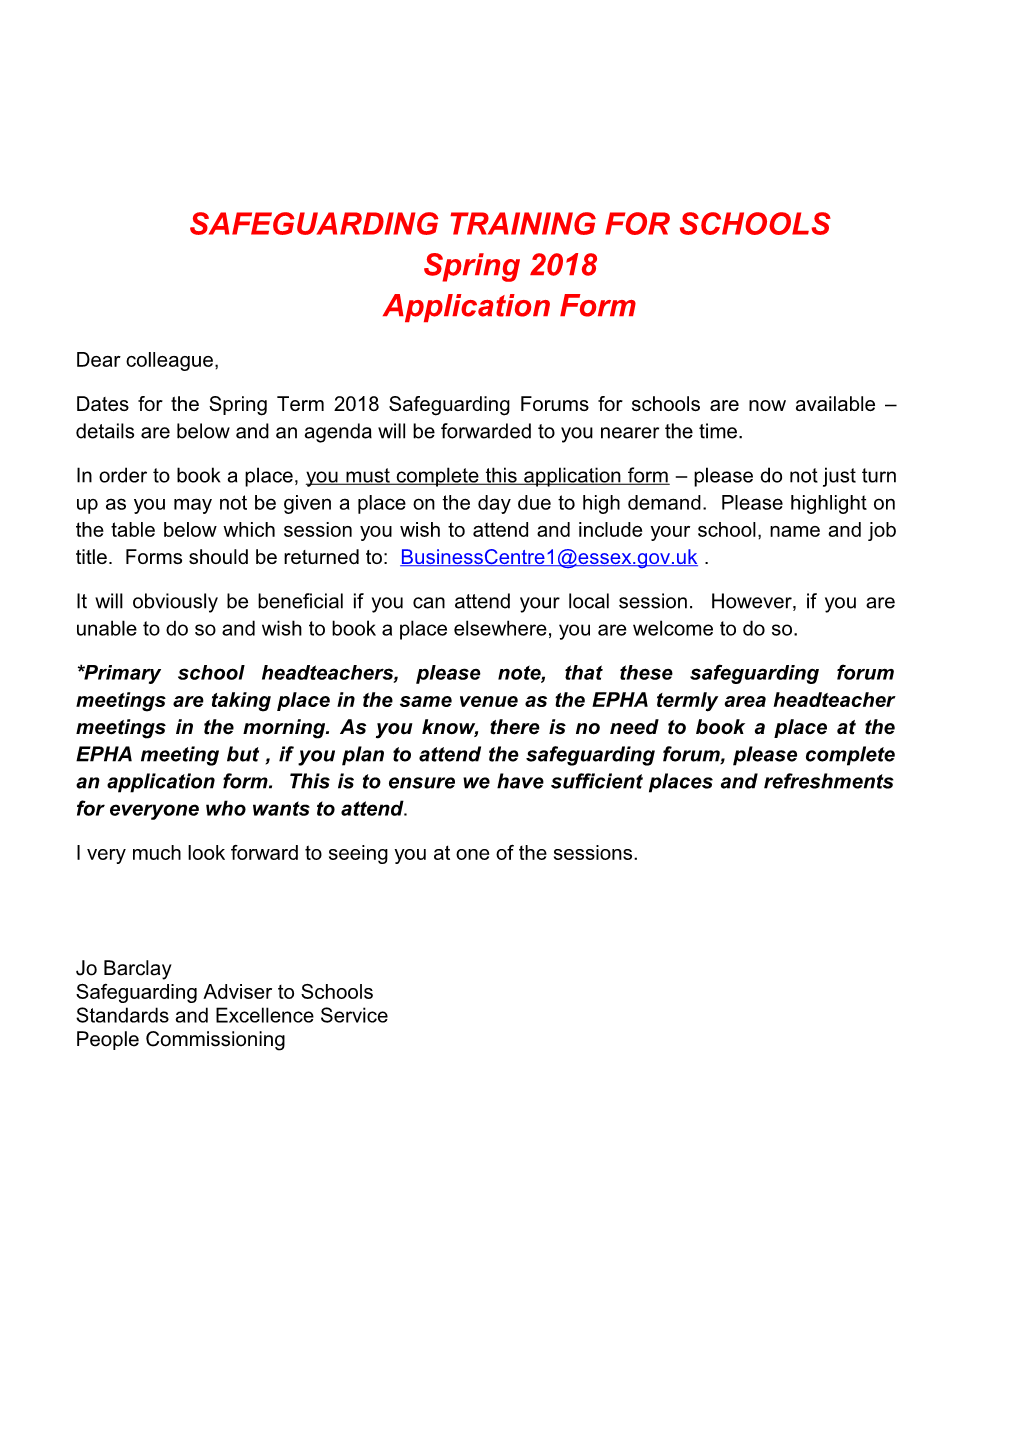 Safeguarding Training for Schools